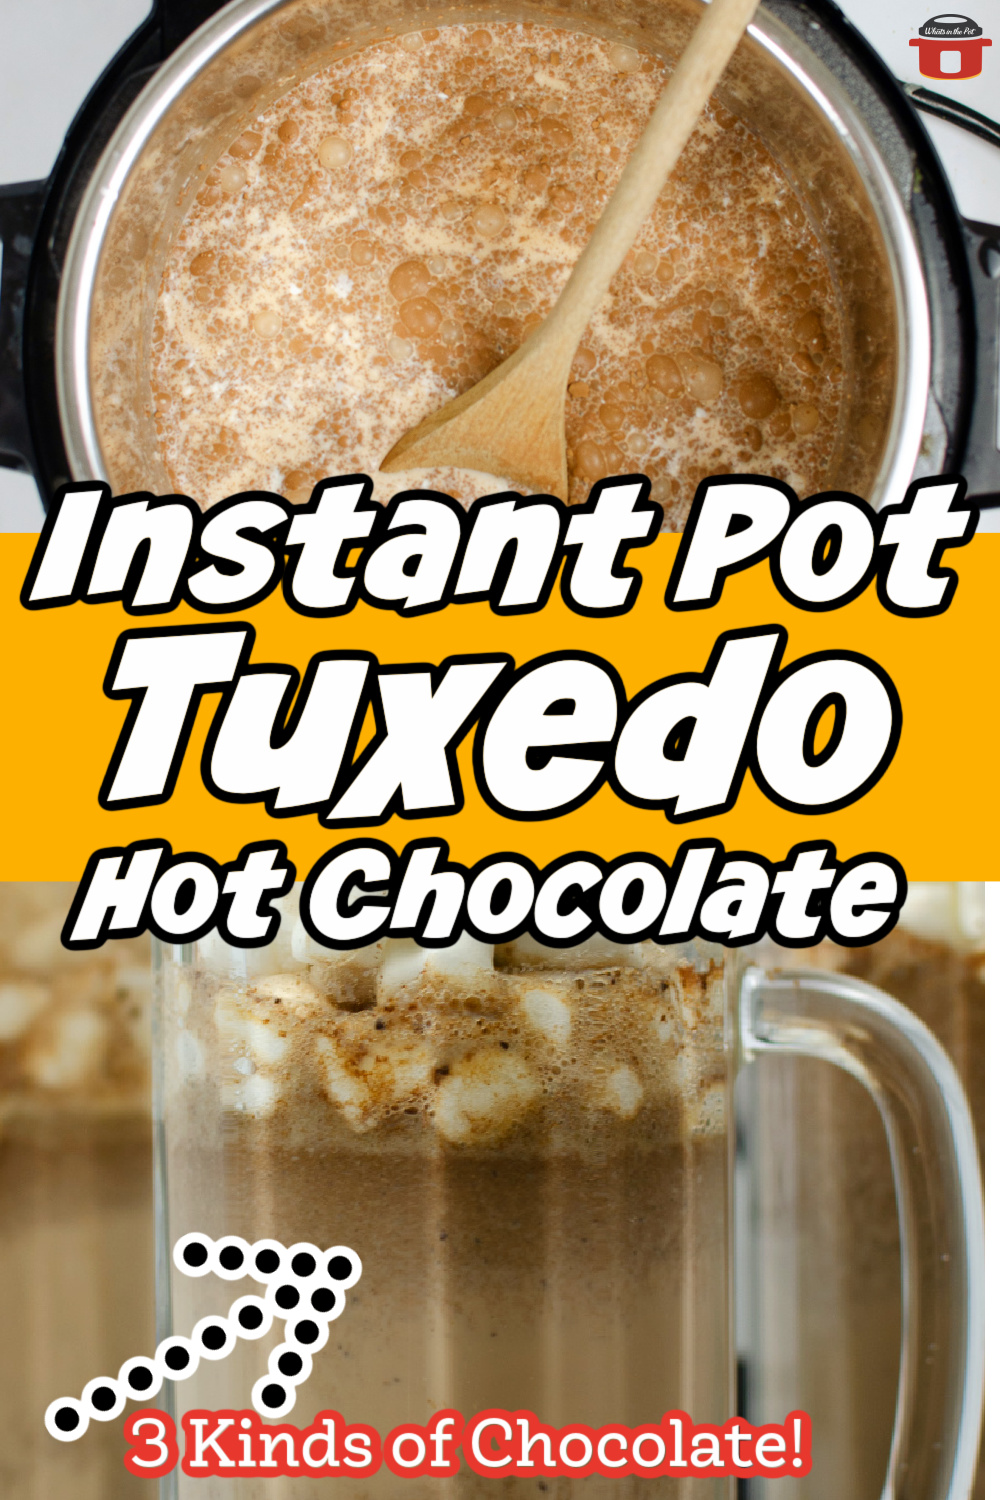 instant pot tuxedo hot chocolate